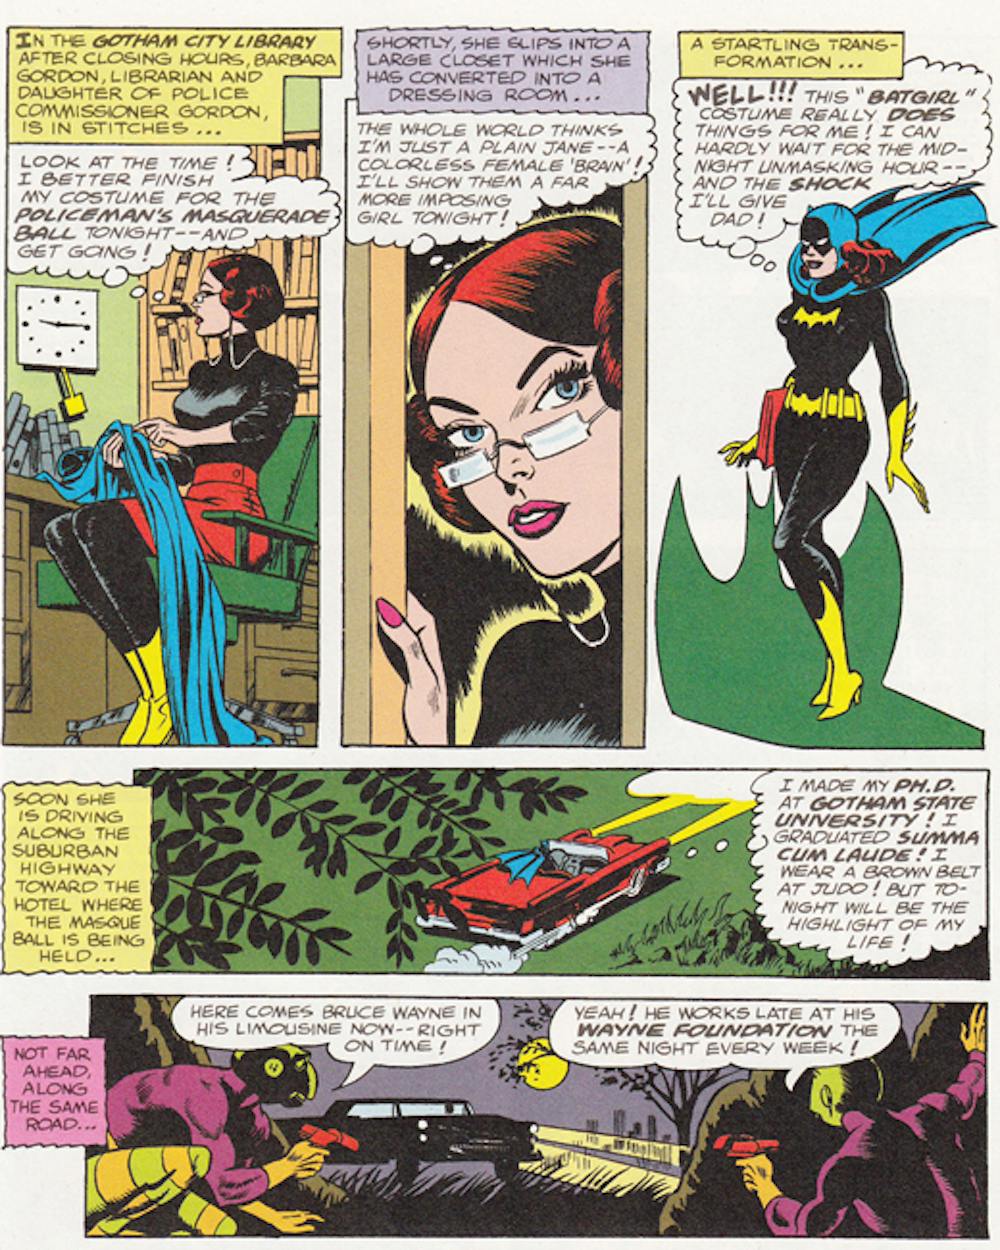 Killing Joke Batgirl Porn - Move over Batgirl, our superheroine is just a normal human being